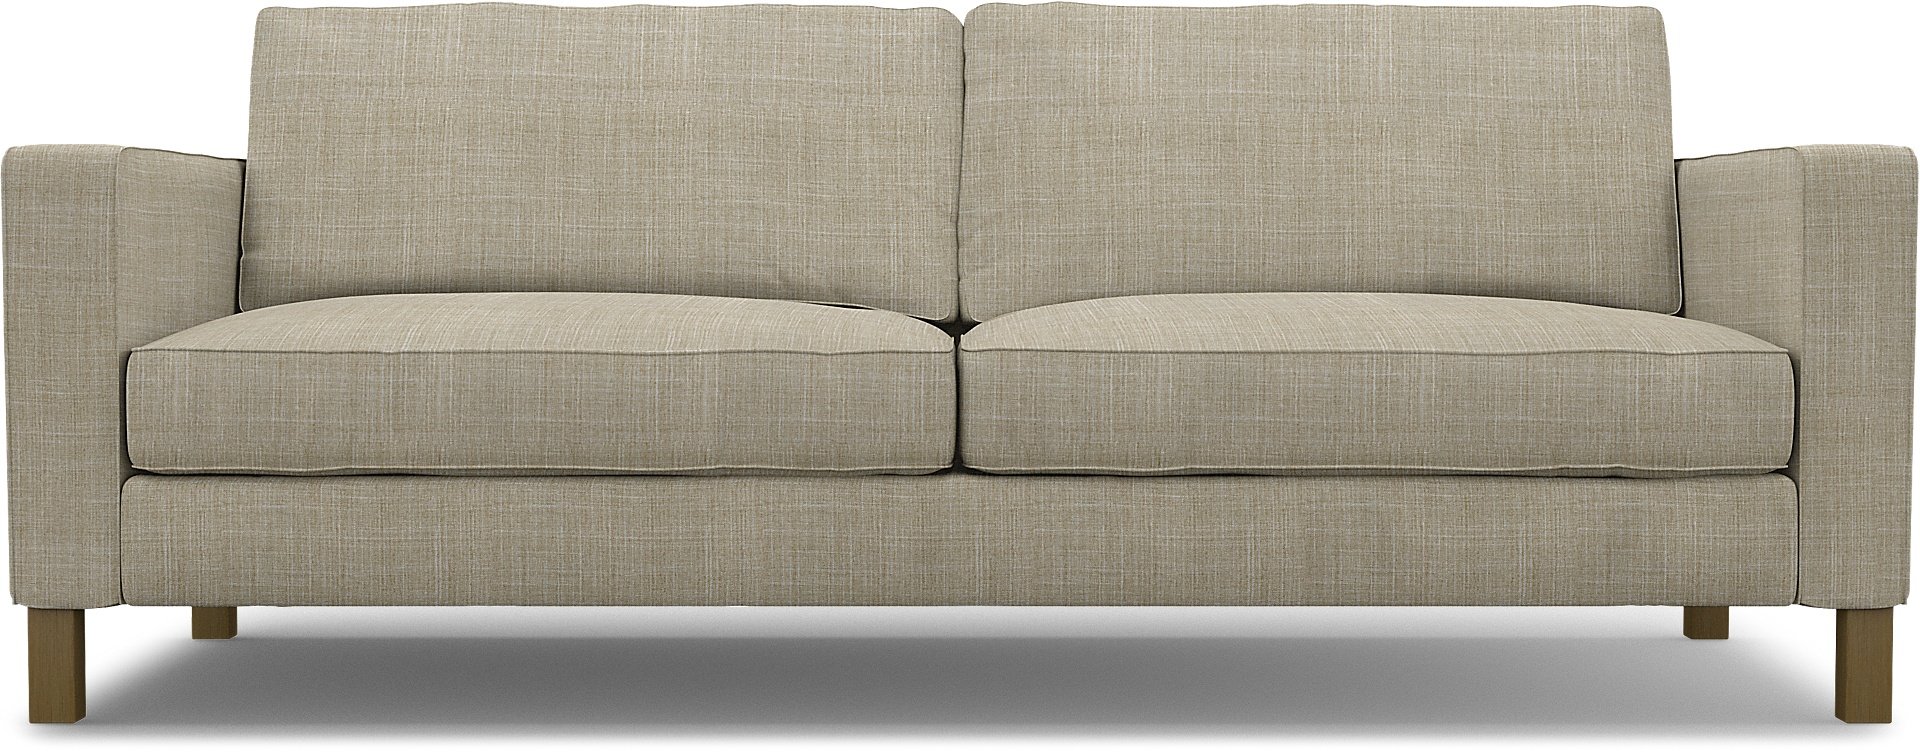 IKEA - Karlstad 3 Seater Sofa Cover, Sand Beige, Boucle & Texture - Bemz